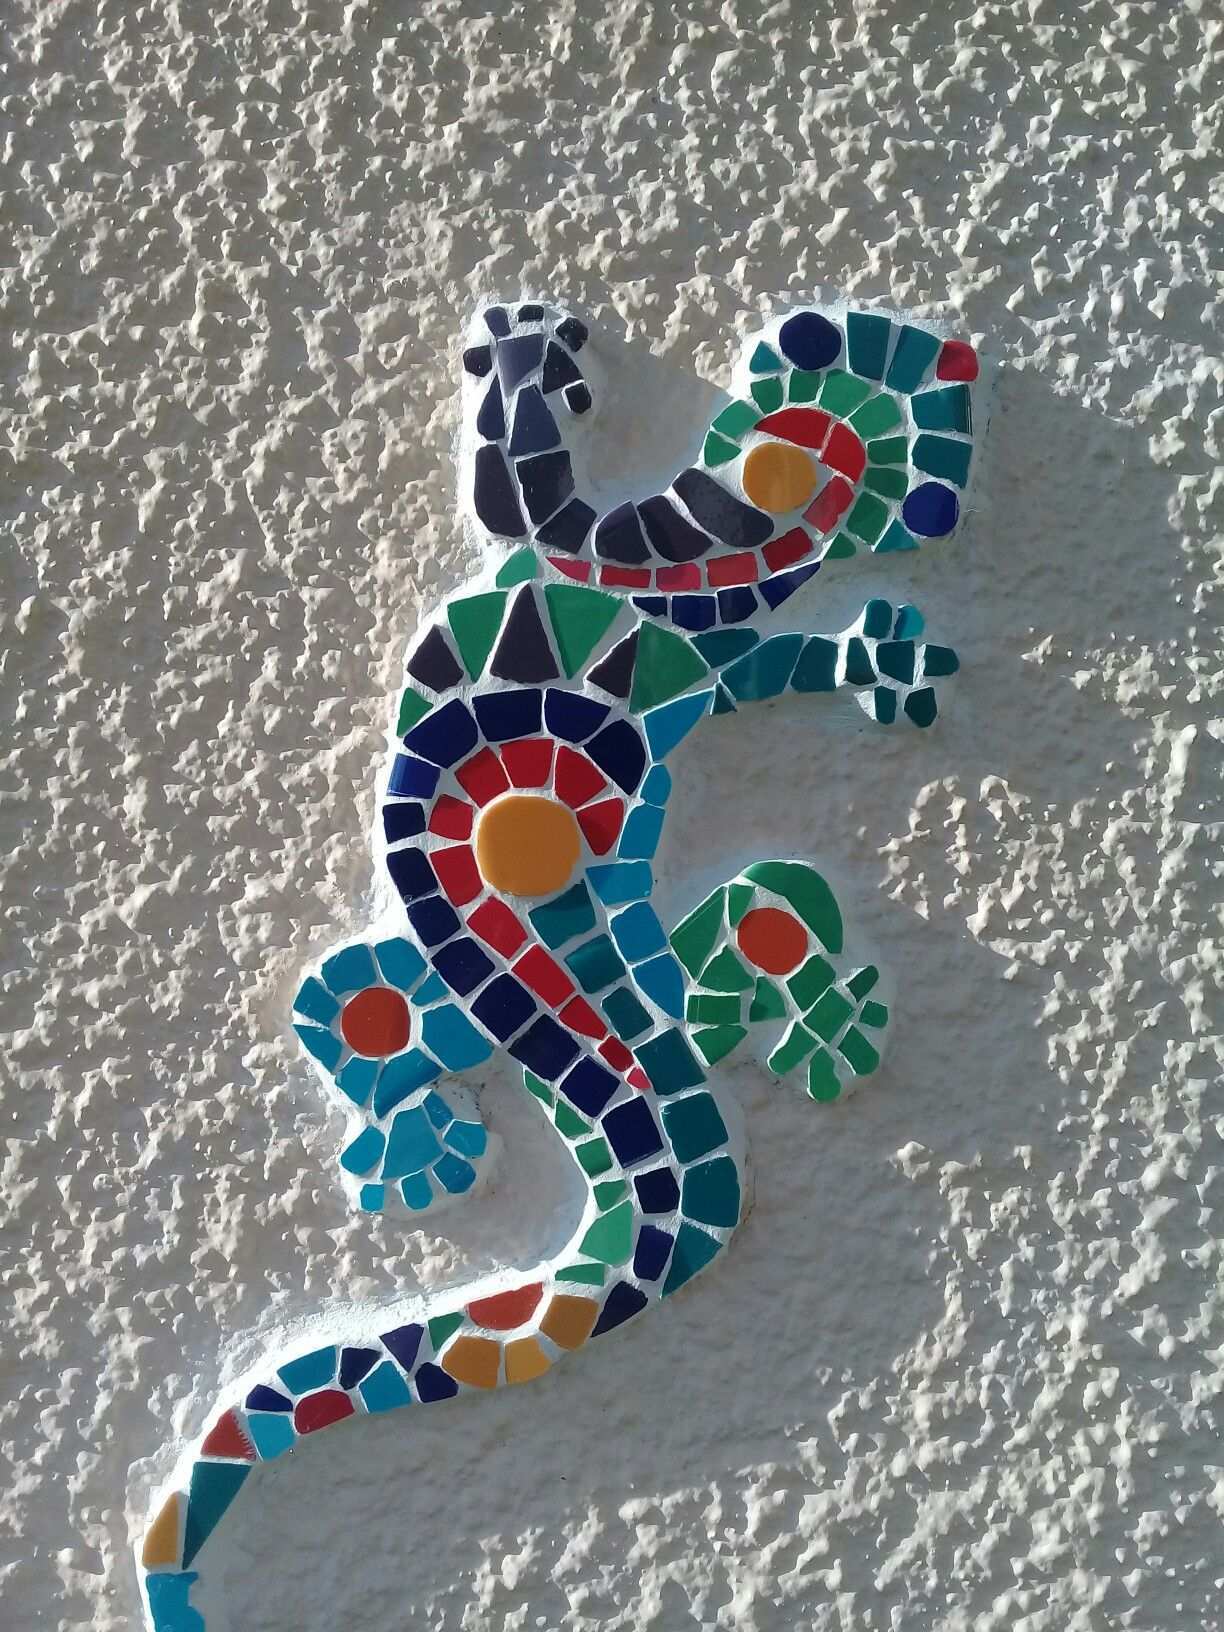 Pin De Simone Wassermann Em Mosaiquismo Arte Em Mosaico Artesanato Em Mosaico Vasos De Flores Em Mosaico